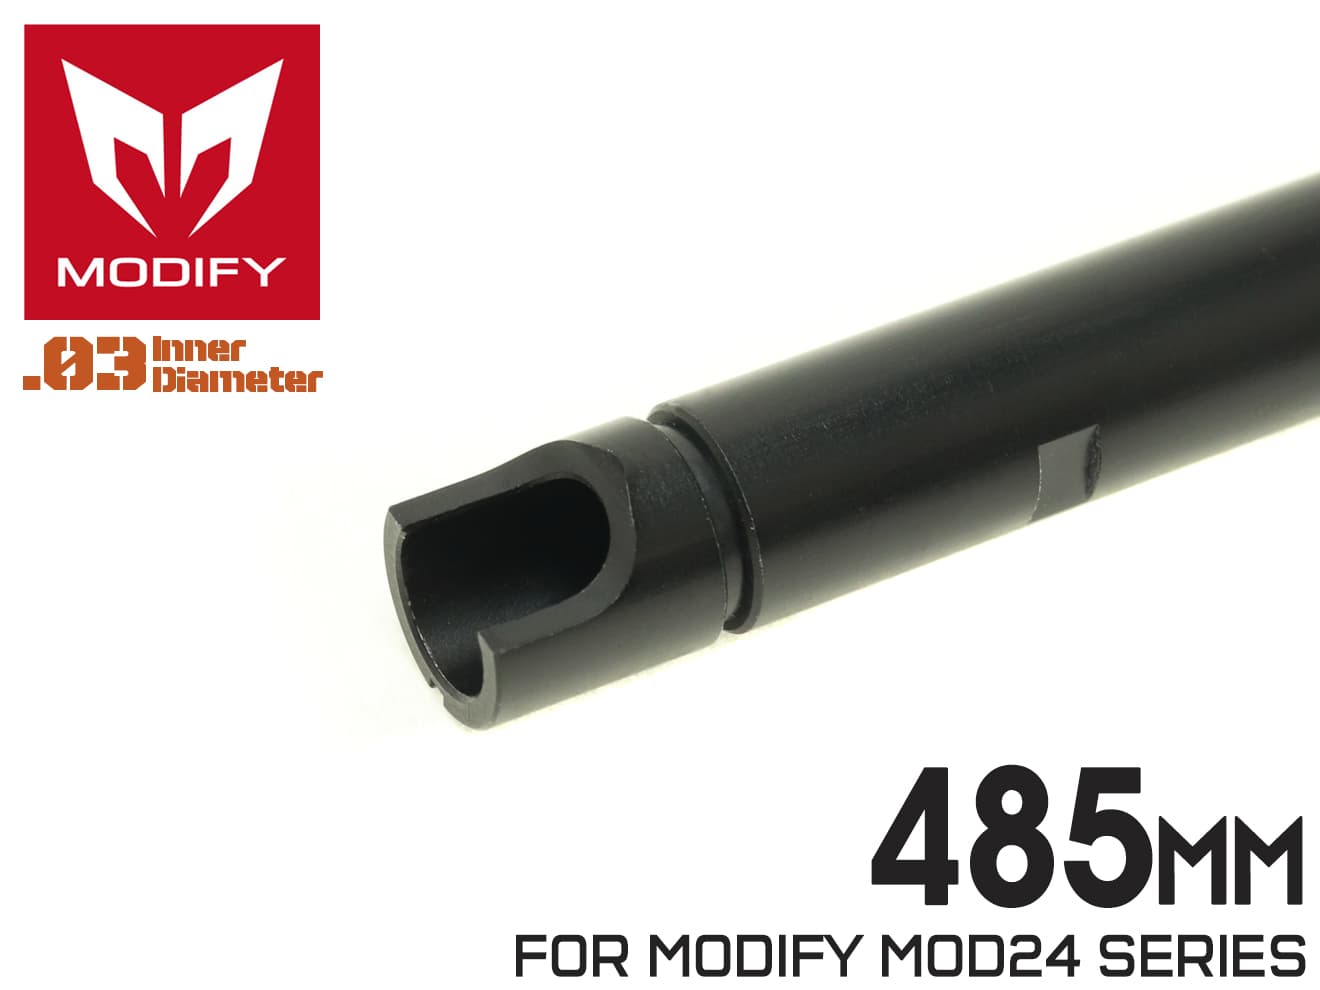 MODIFY 6.03 プレシジョンインナーバレル AL 485mm for MOD24シリーズ◆モディファイ製 エアコキ MOD24シリーズ対応 軽量 精密バレル